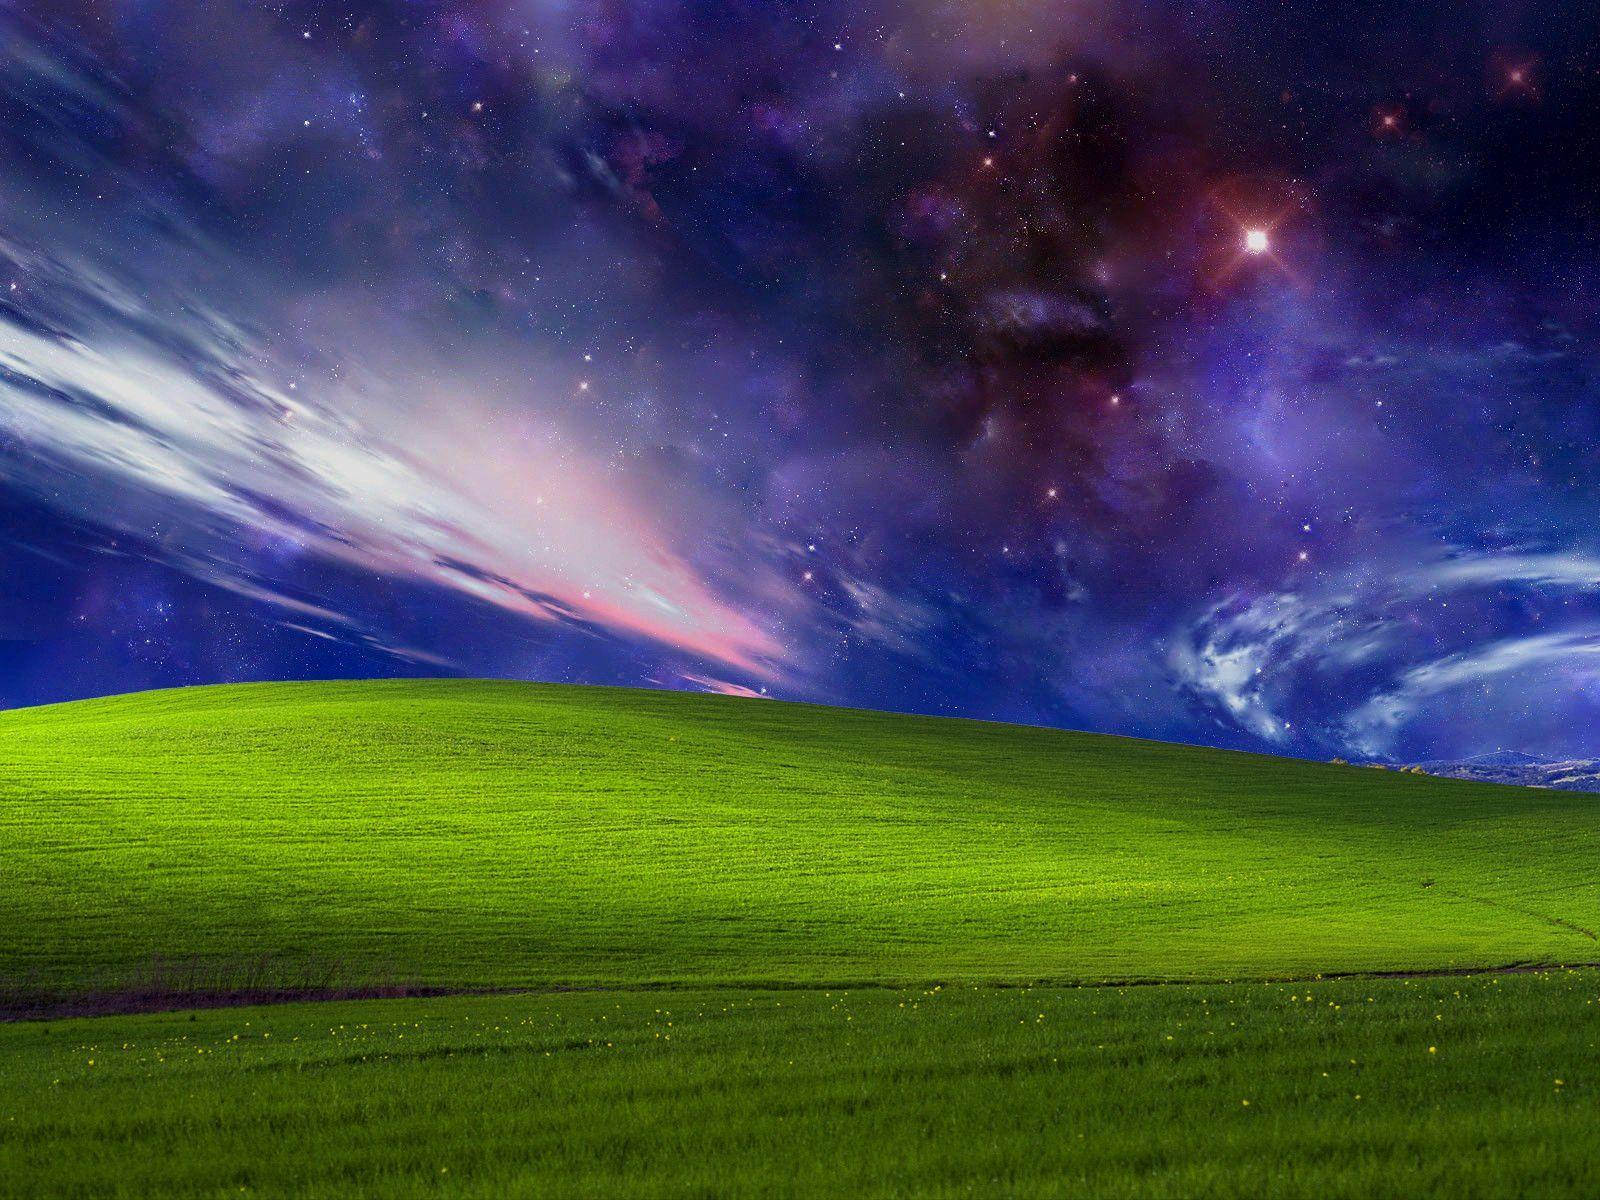 Windows XP Wallpapers HD - Wallpaper Cave